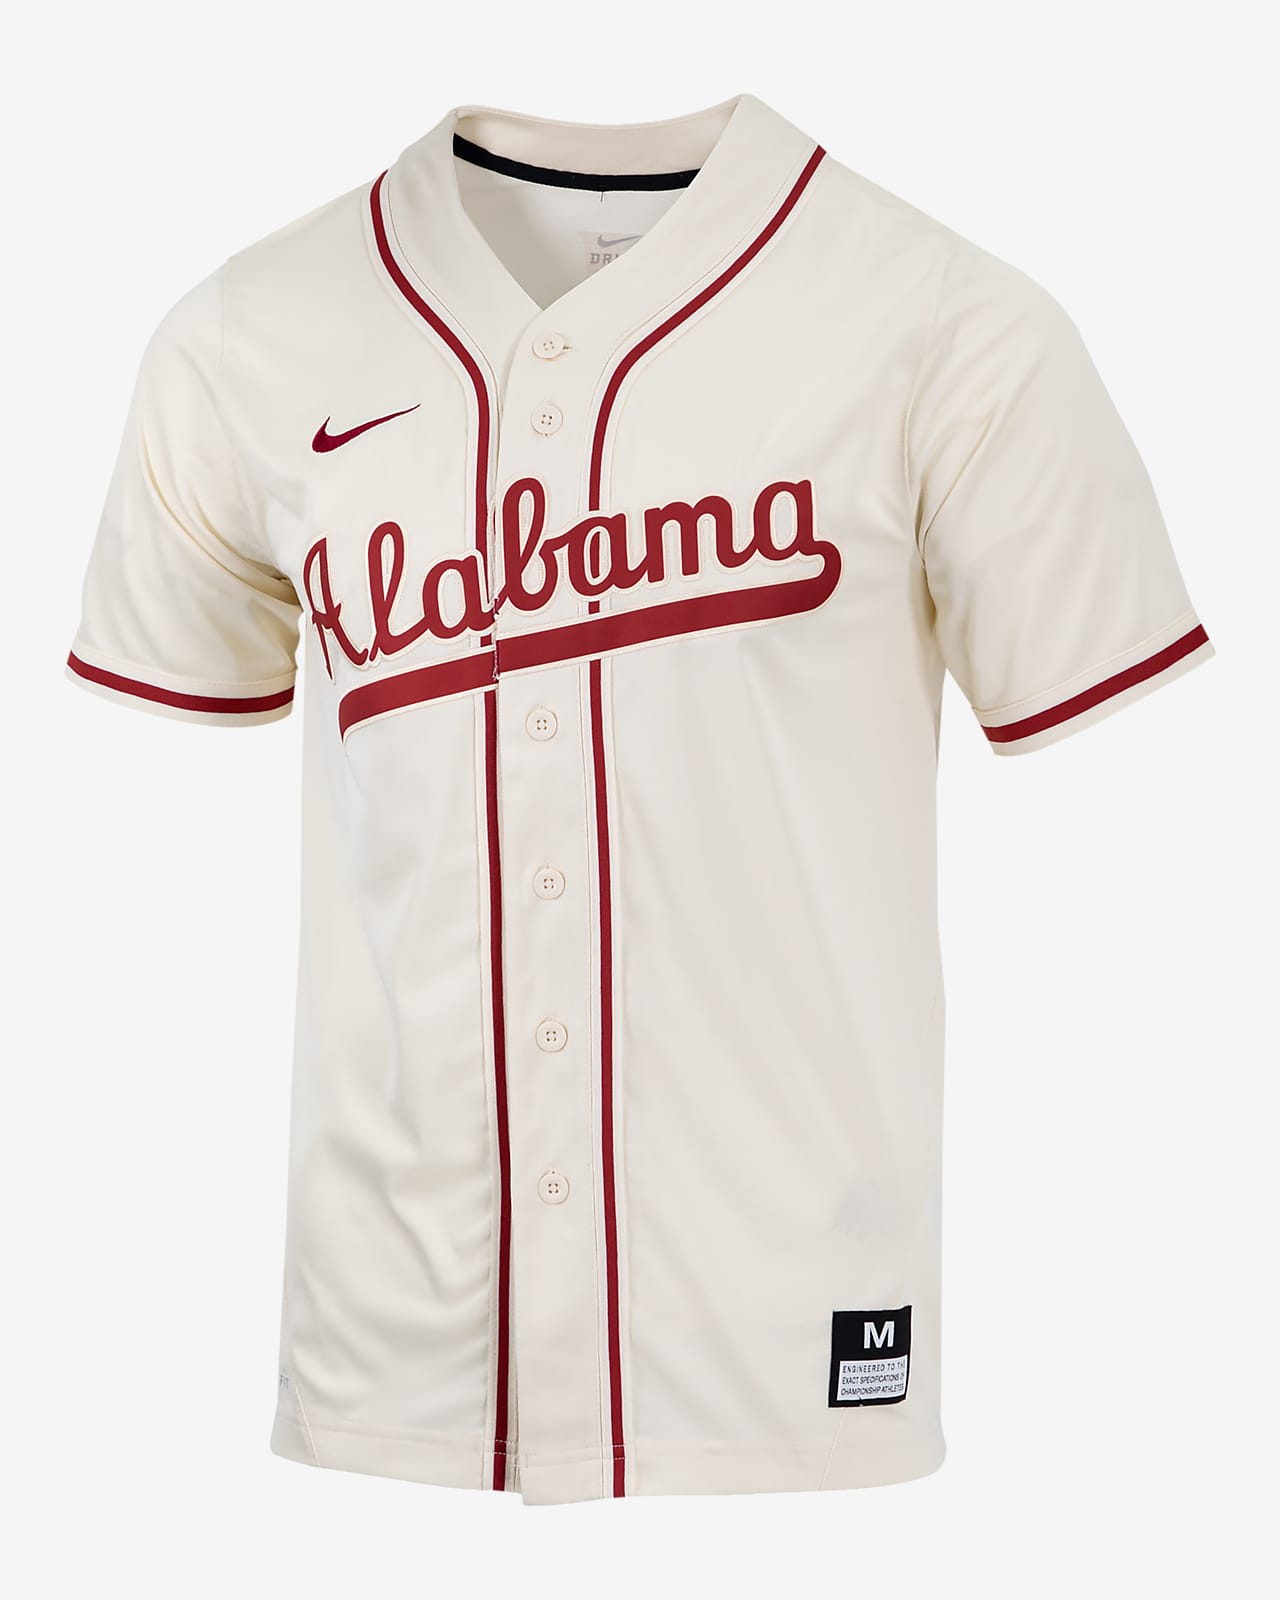 Alabama Men's Nike College Replica Baseball Jersey